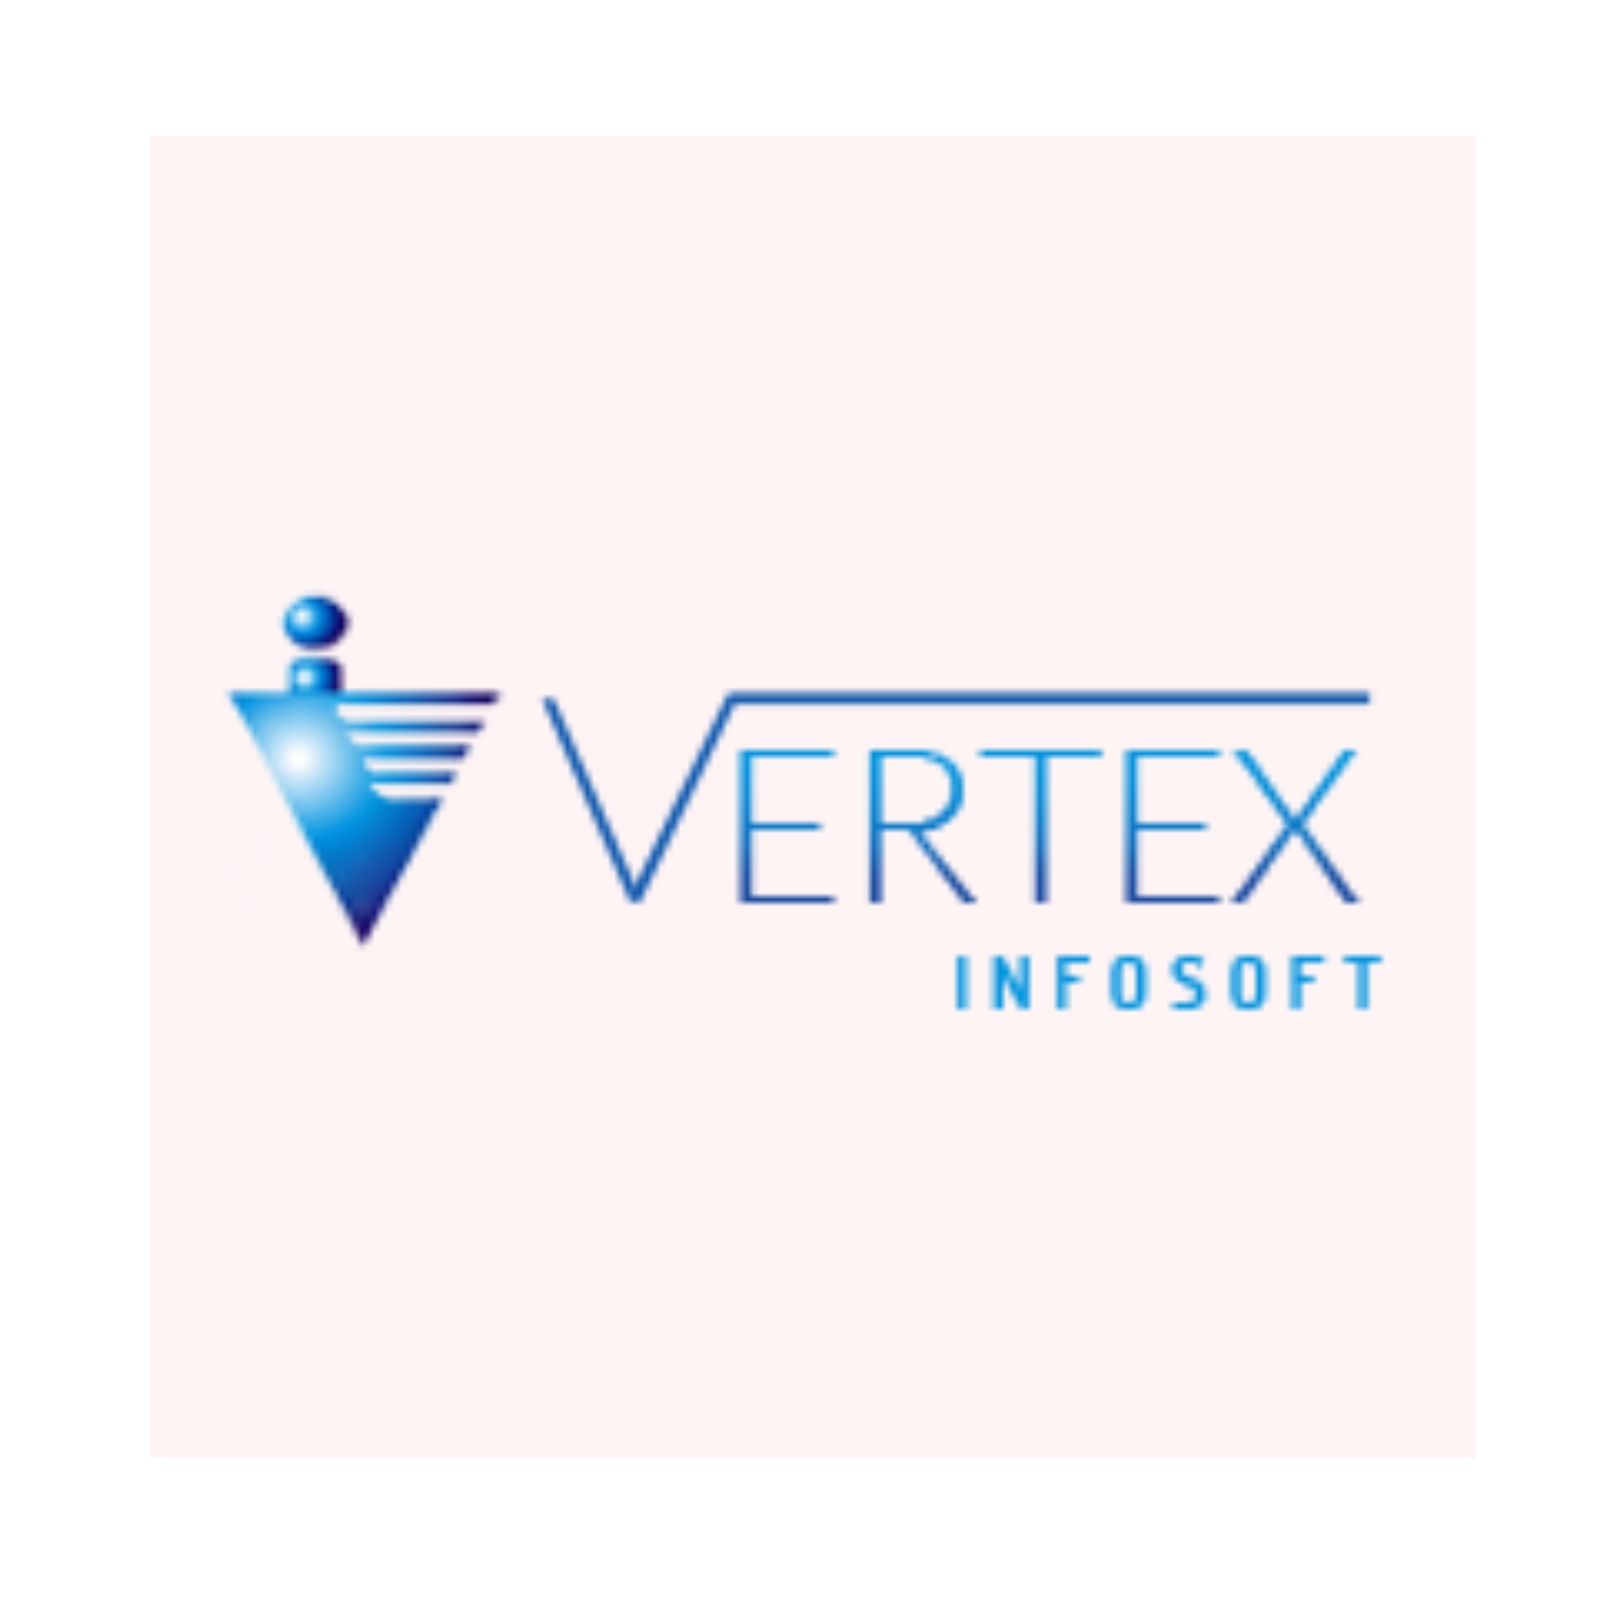 Vertex Infosoft